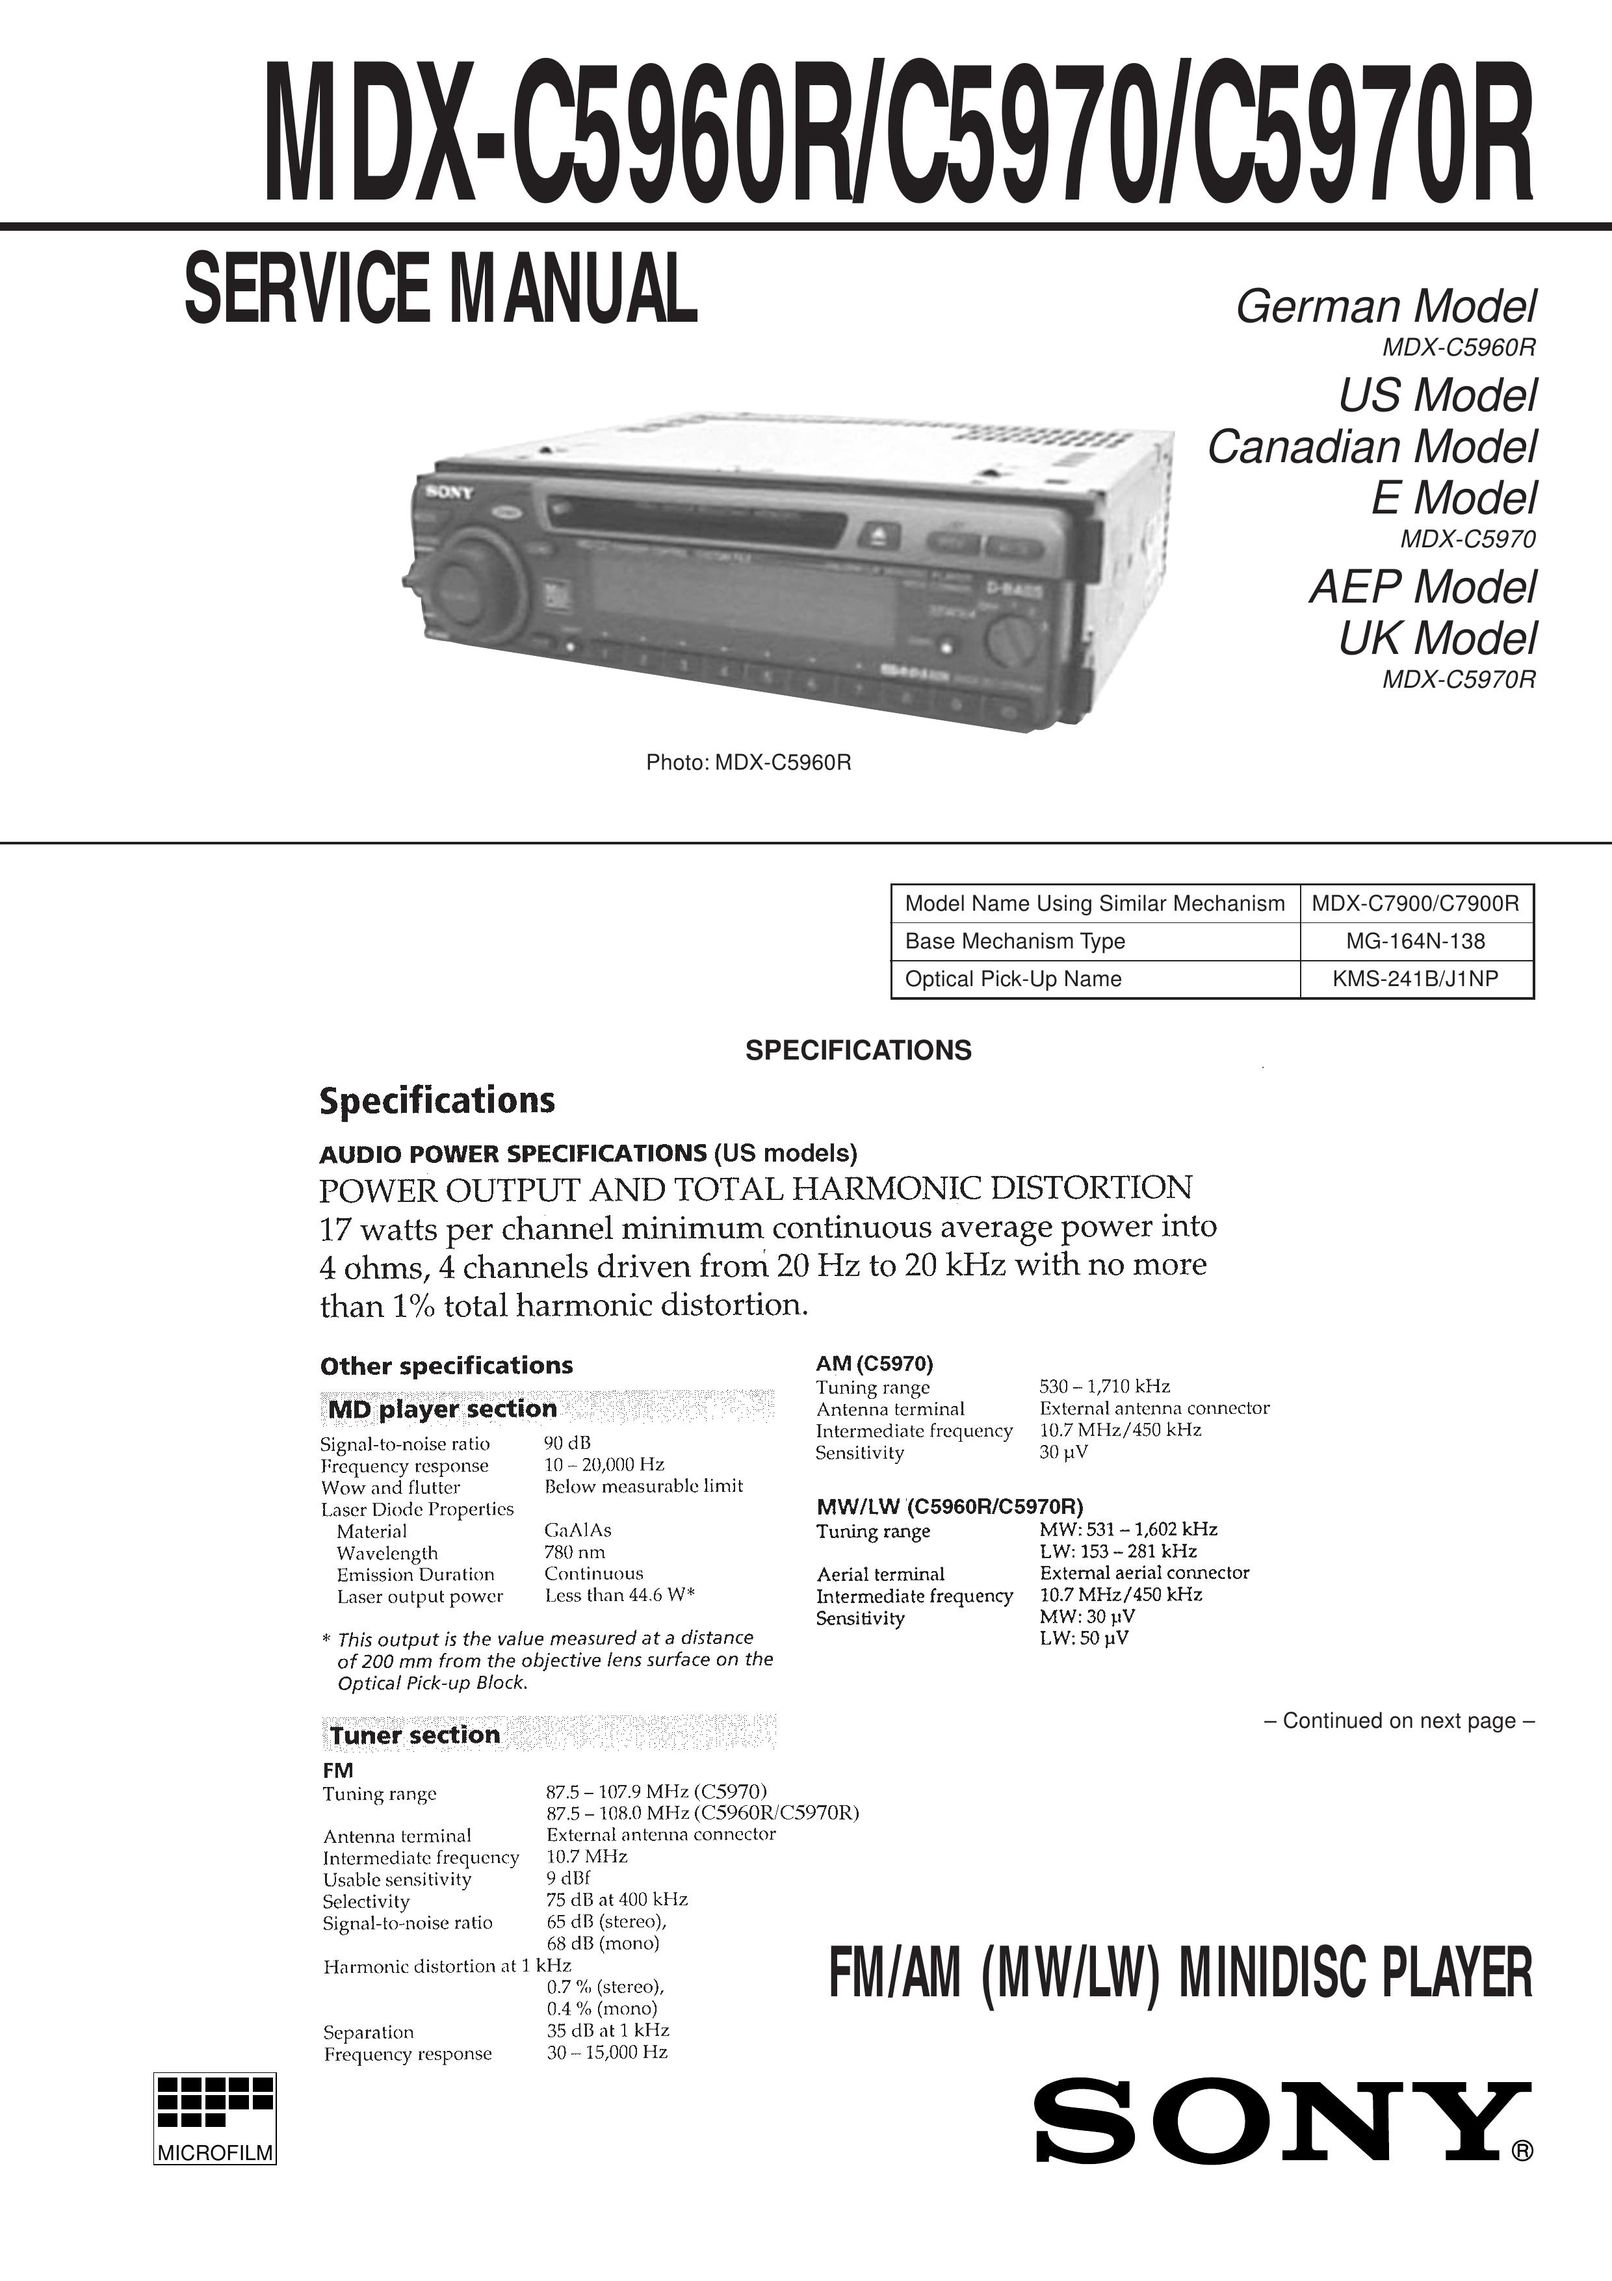 Sony MDX-C5970 MiniDisc Player User Manual